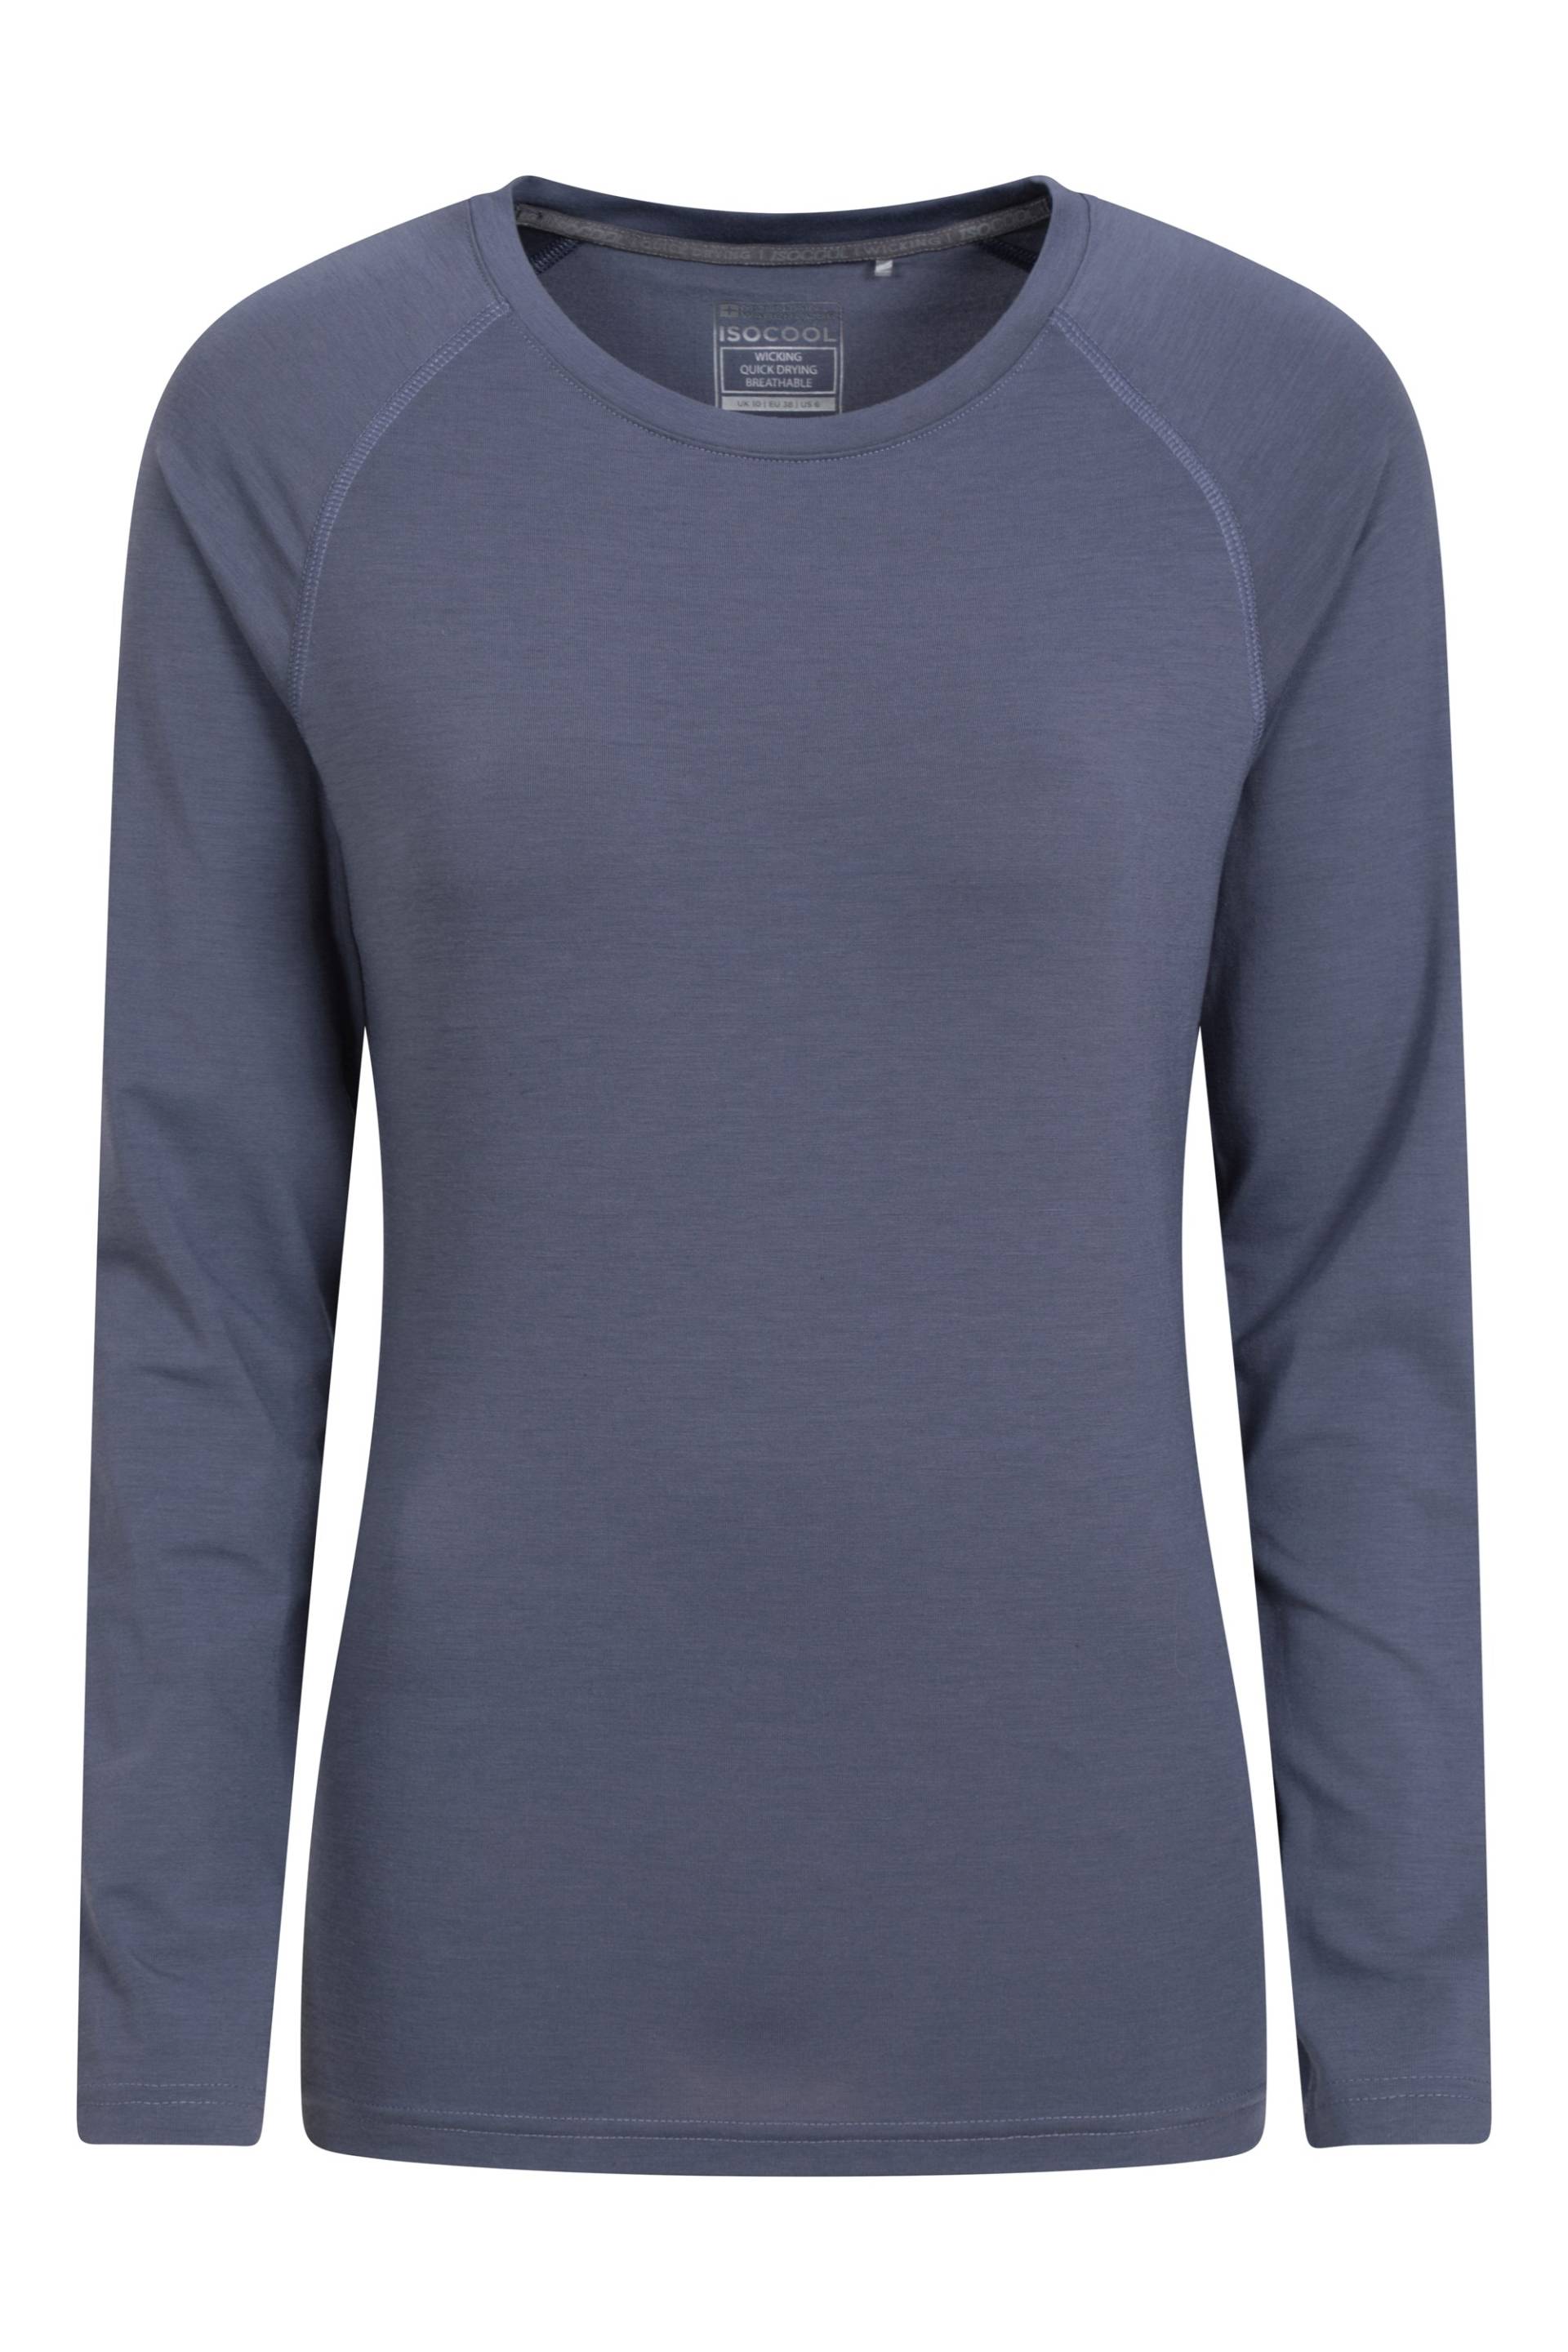 IsoCool Dynamic Damen Langarm-Shirt - Grau von Mountain Warehouse